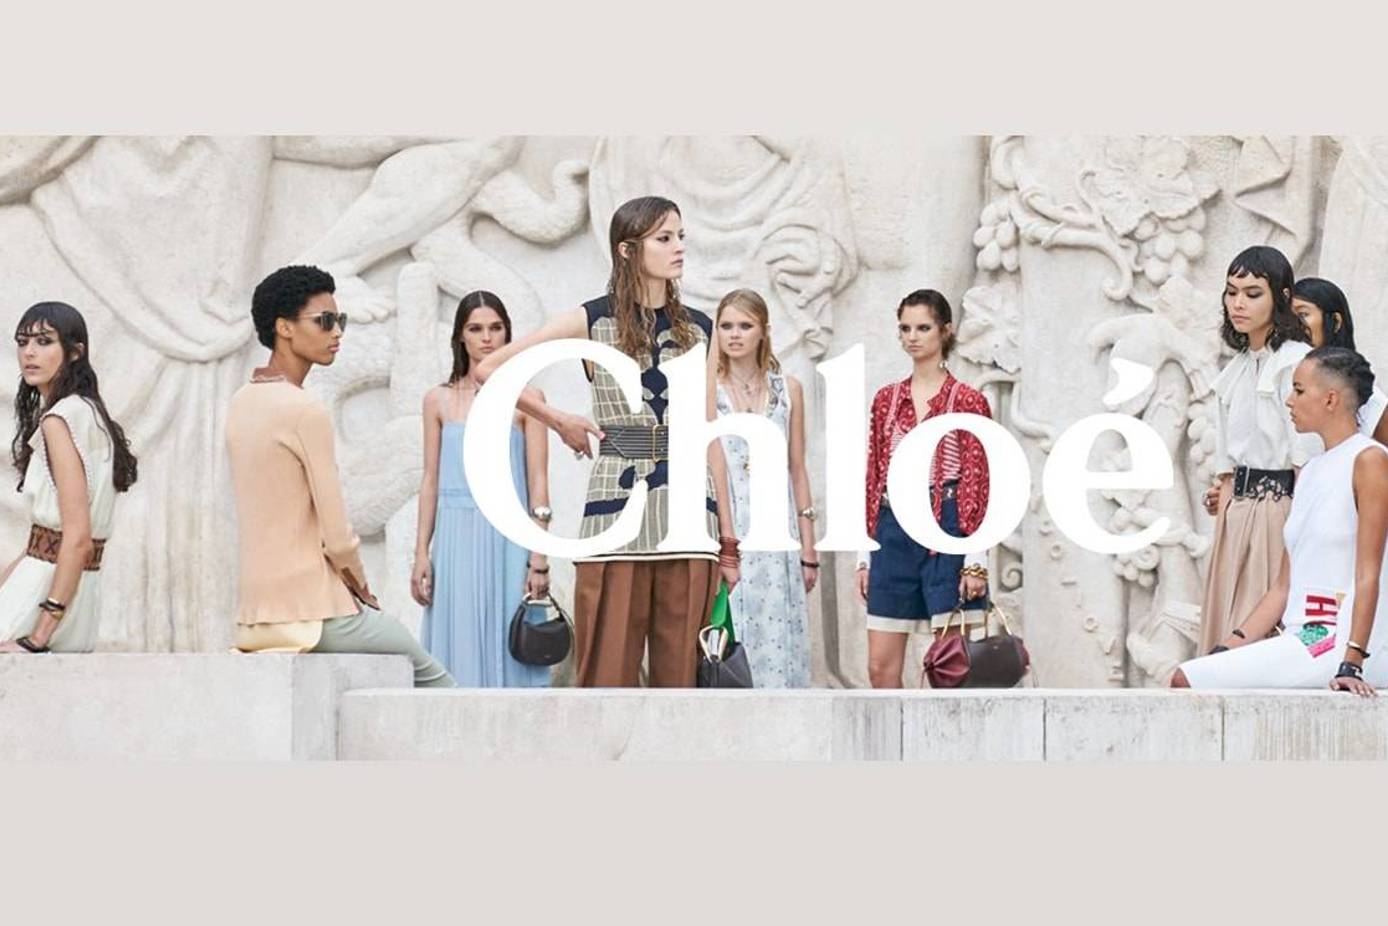 Chloé creative director Gabriela Hearst on making fashion